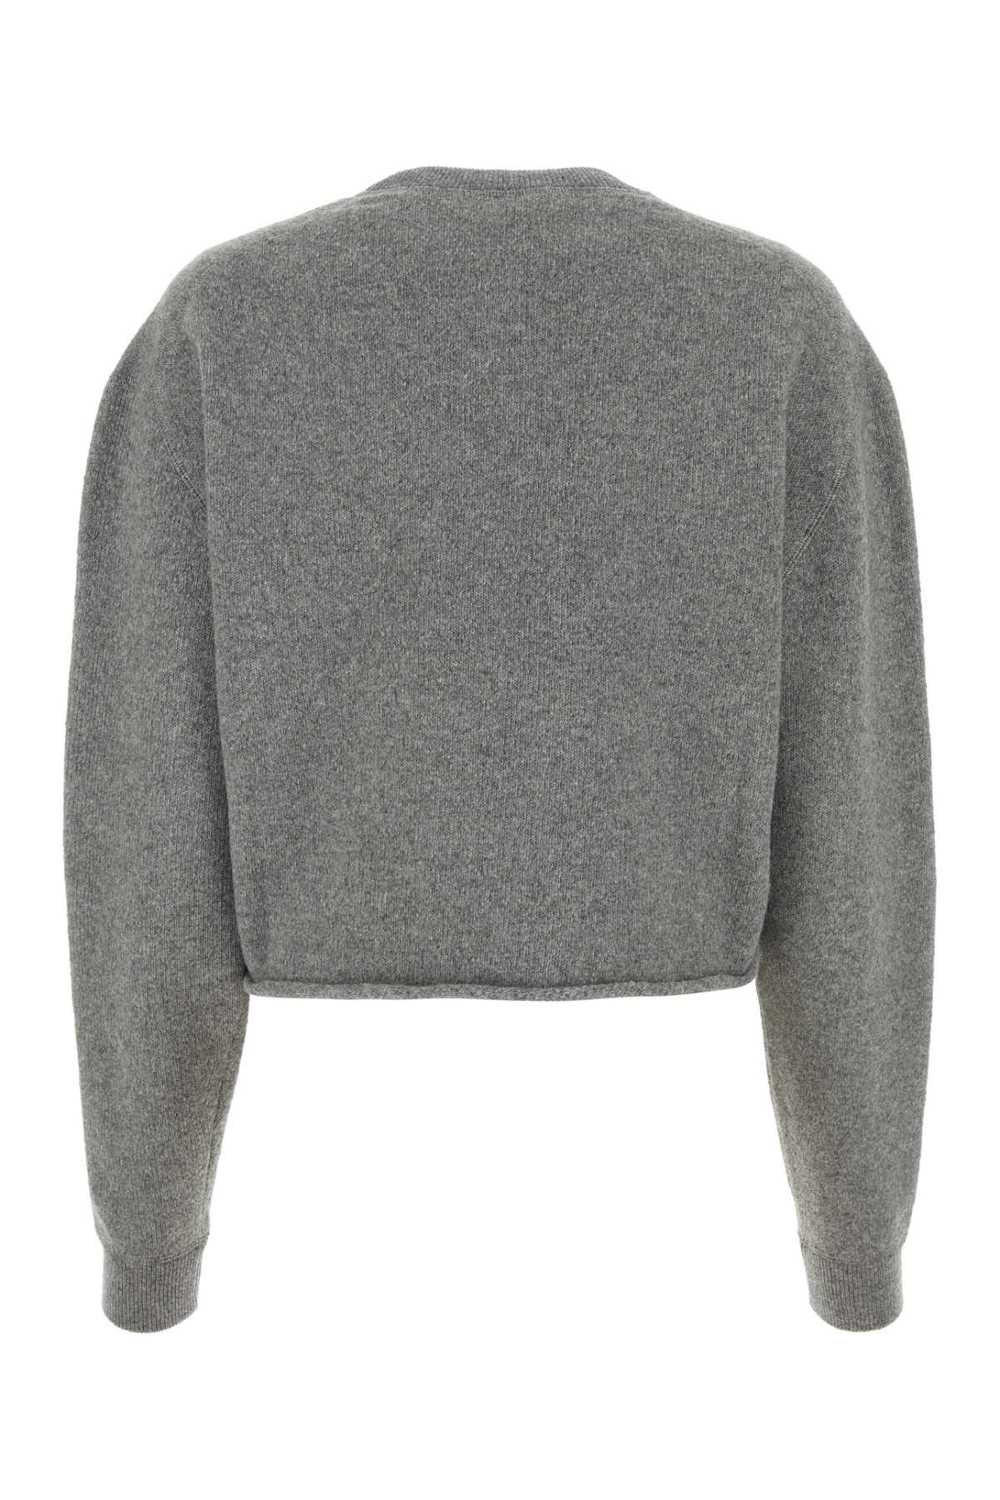 Miu Miu Grey Wool Blend Sweater - image 2